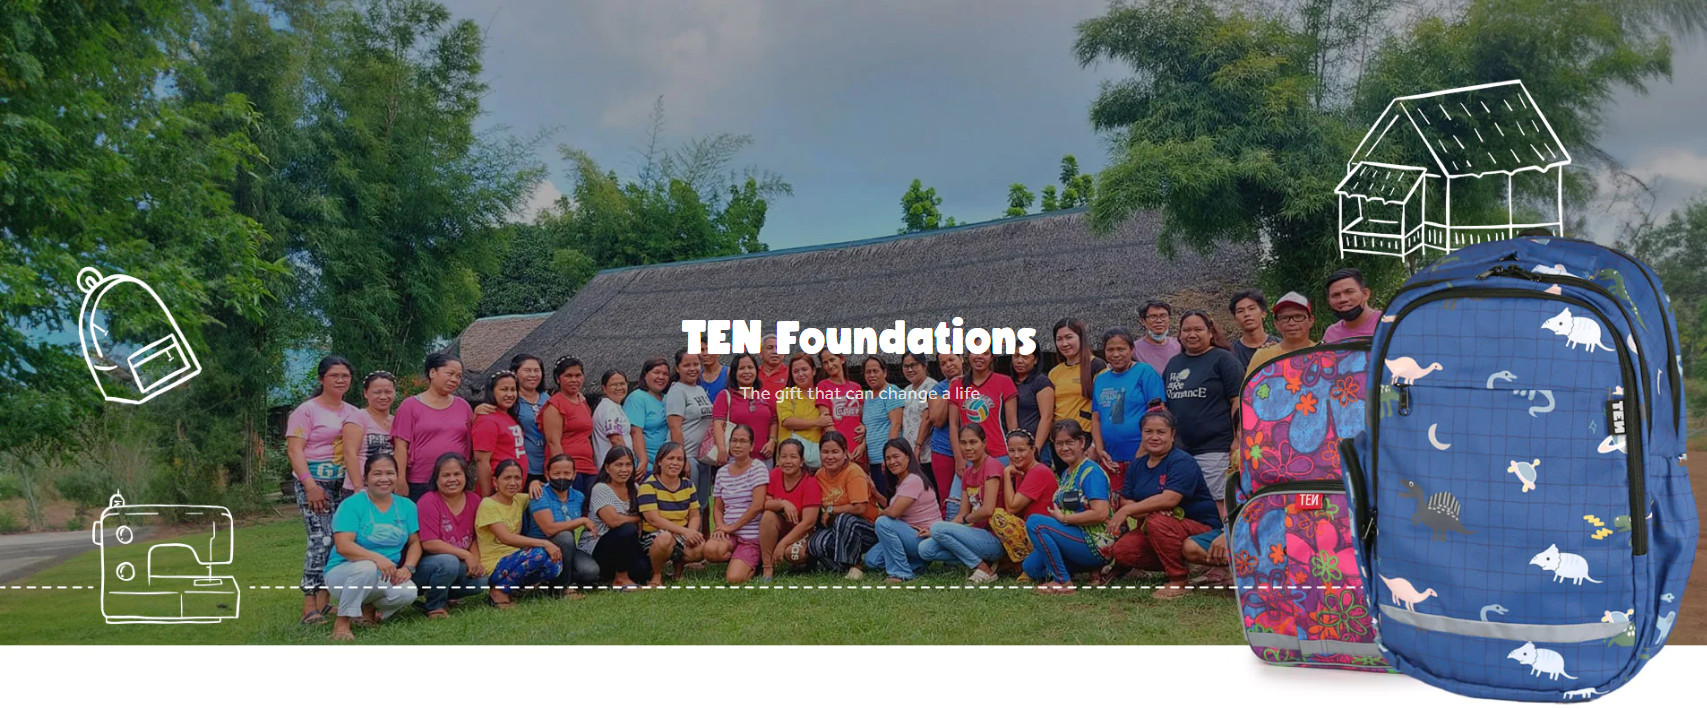 Ten Foundations